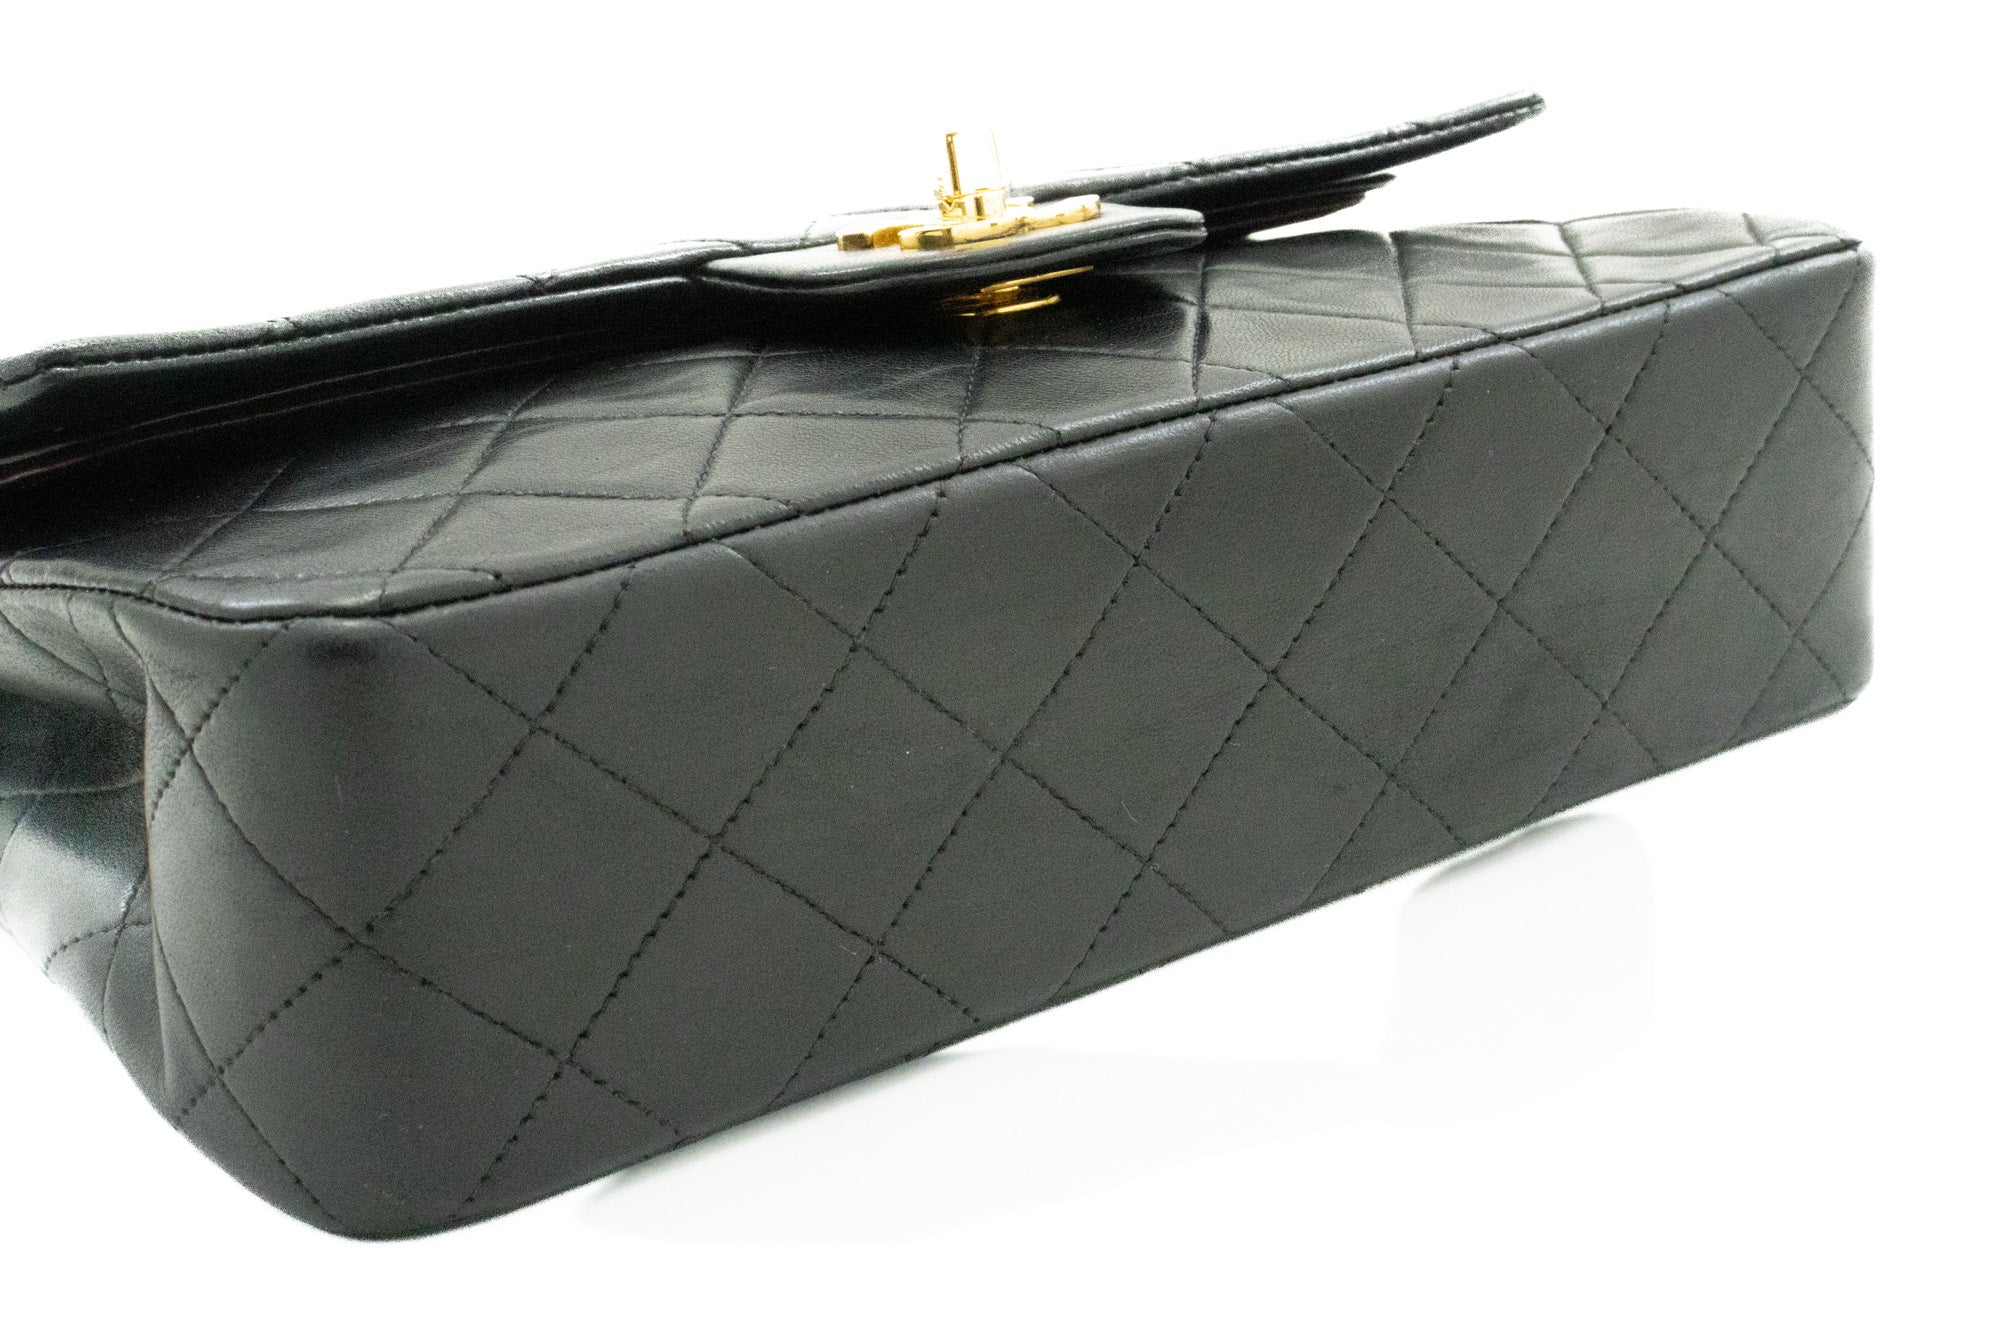 Chanel Large Classic Handbag Chain Shoulder Bag Flap Black Caviar G66